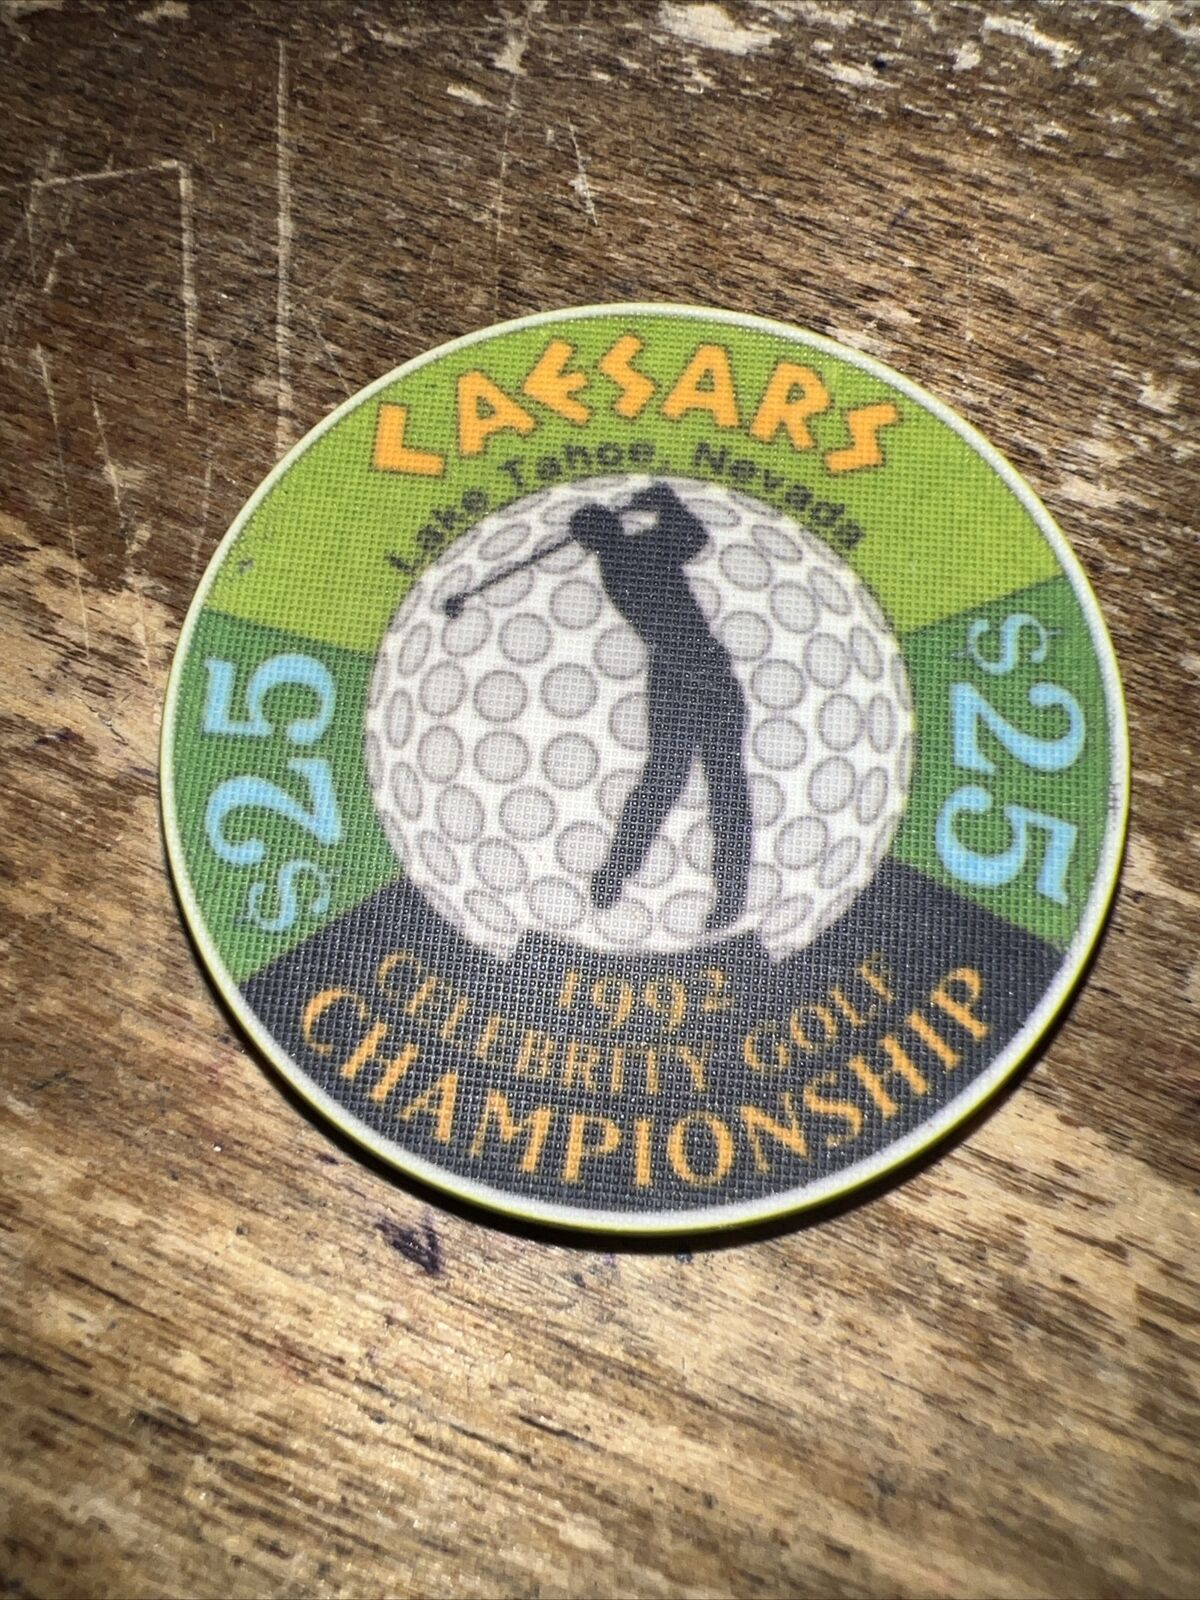 Vintage Caesars Tahoe Celebrity Golf Championship $25 Casino Chip 1992